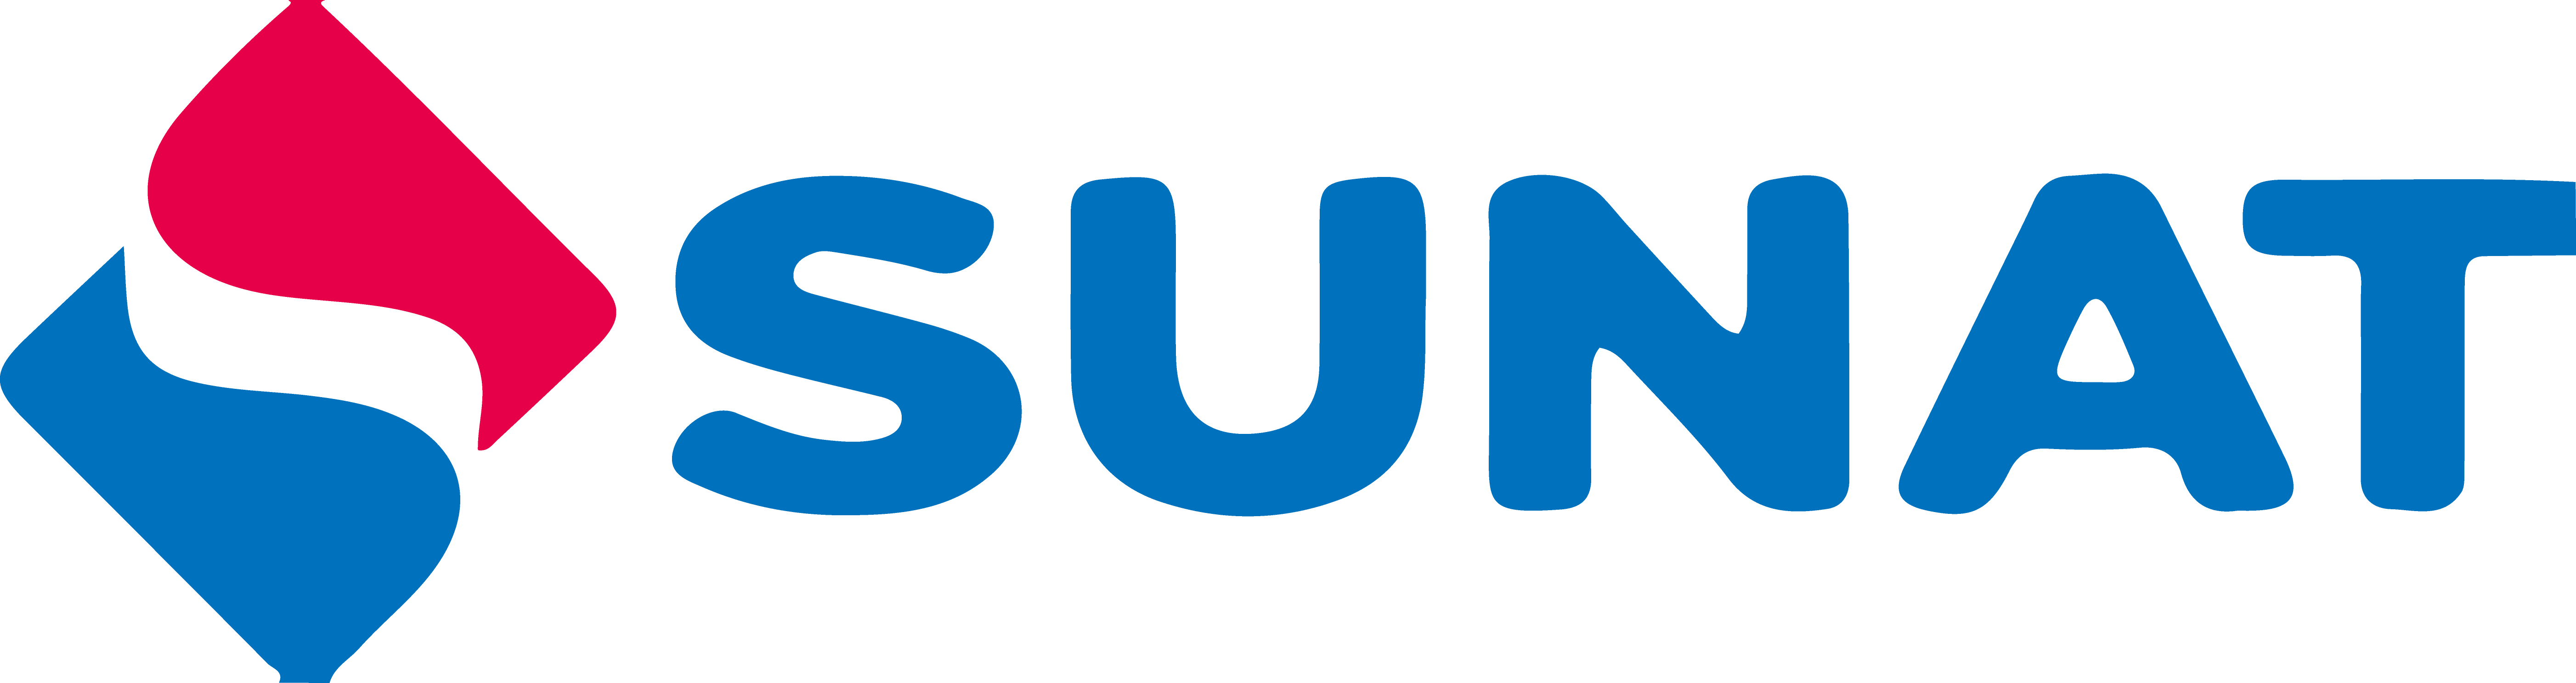 SUNAT-1.png